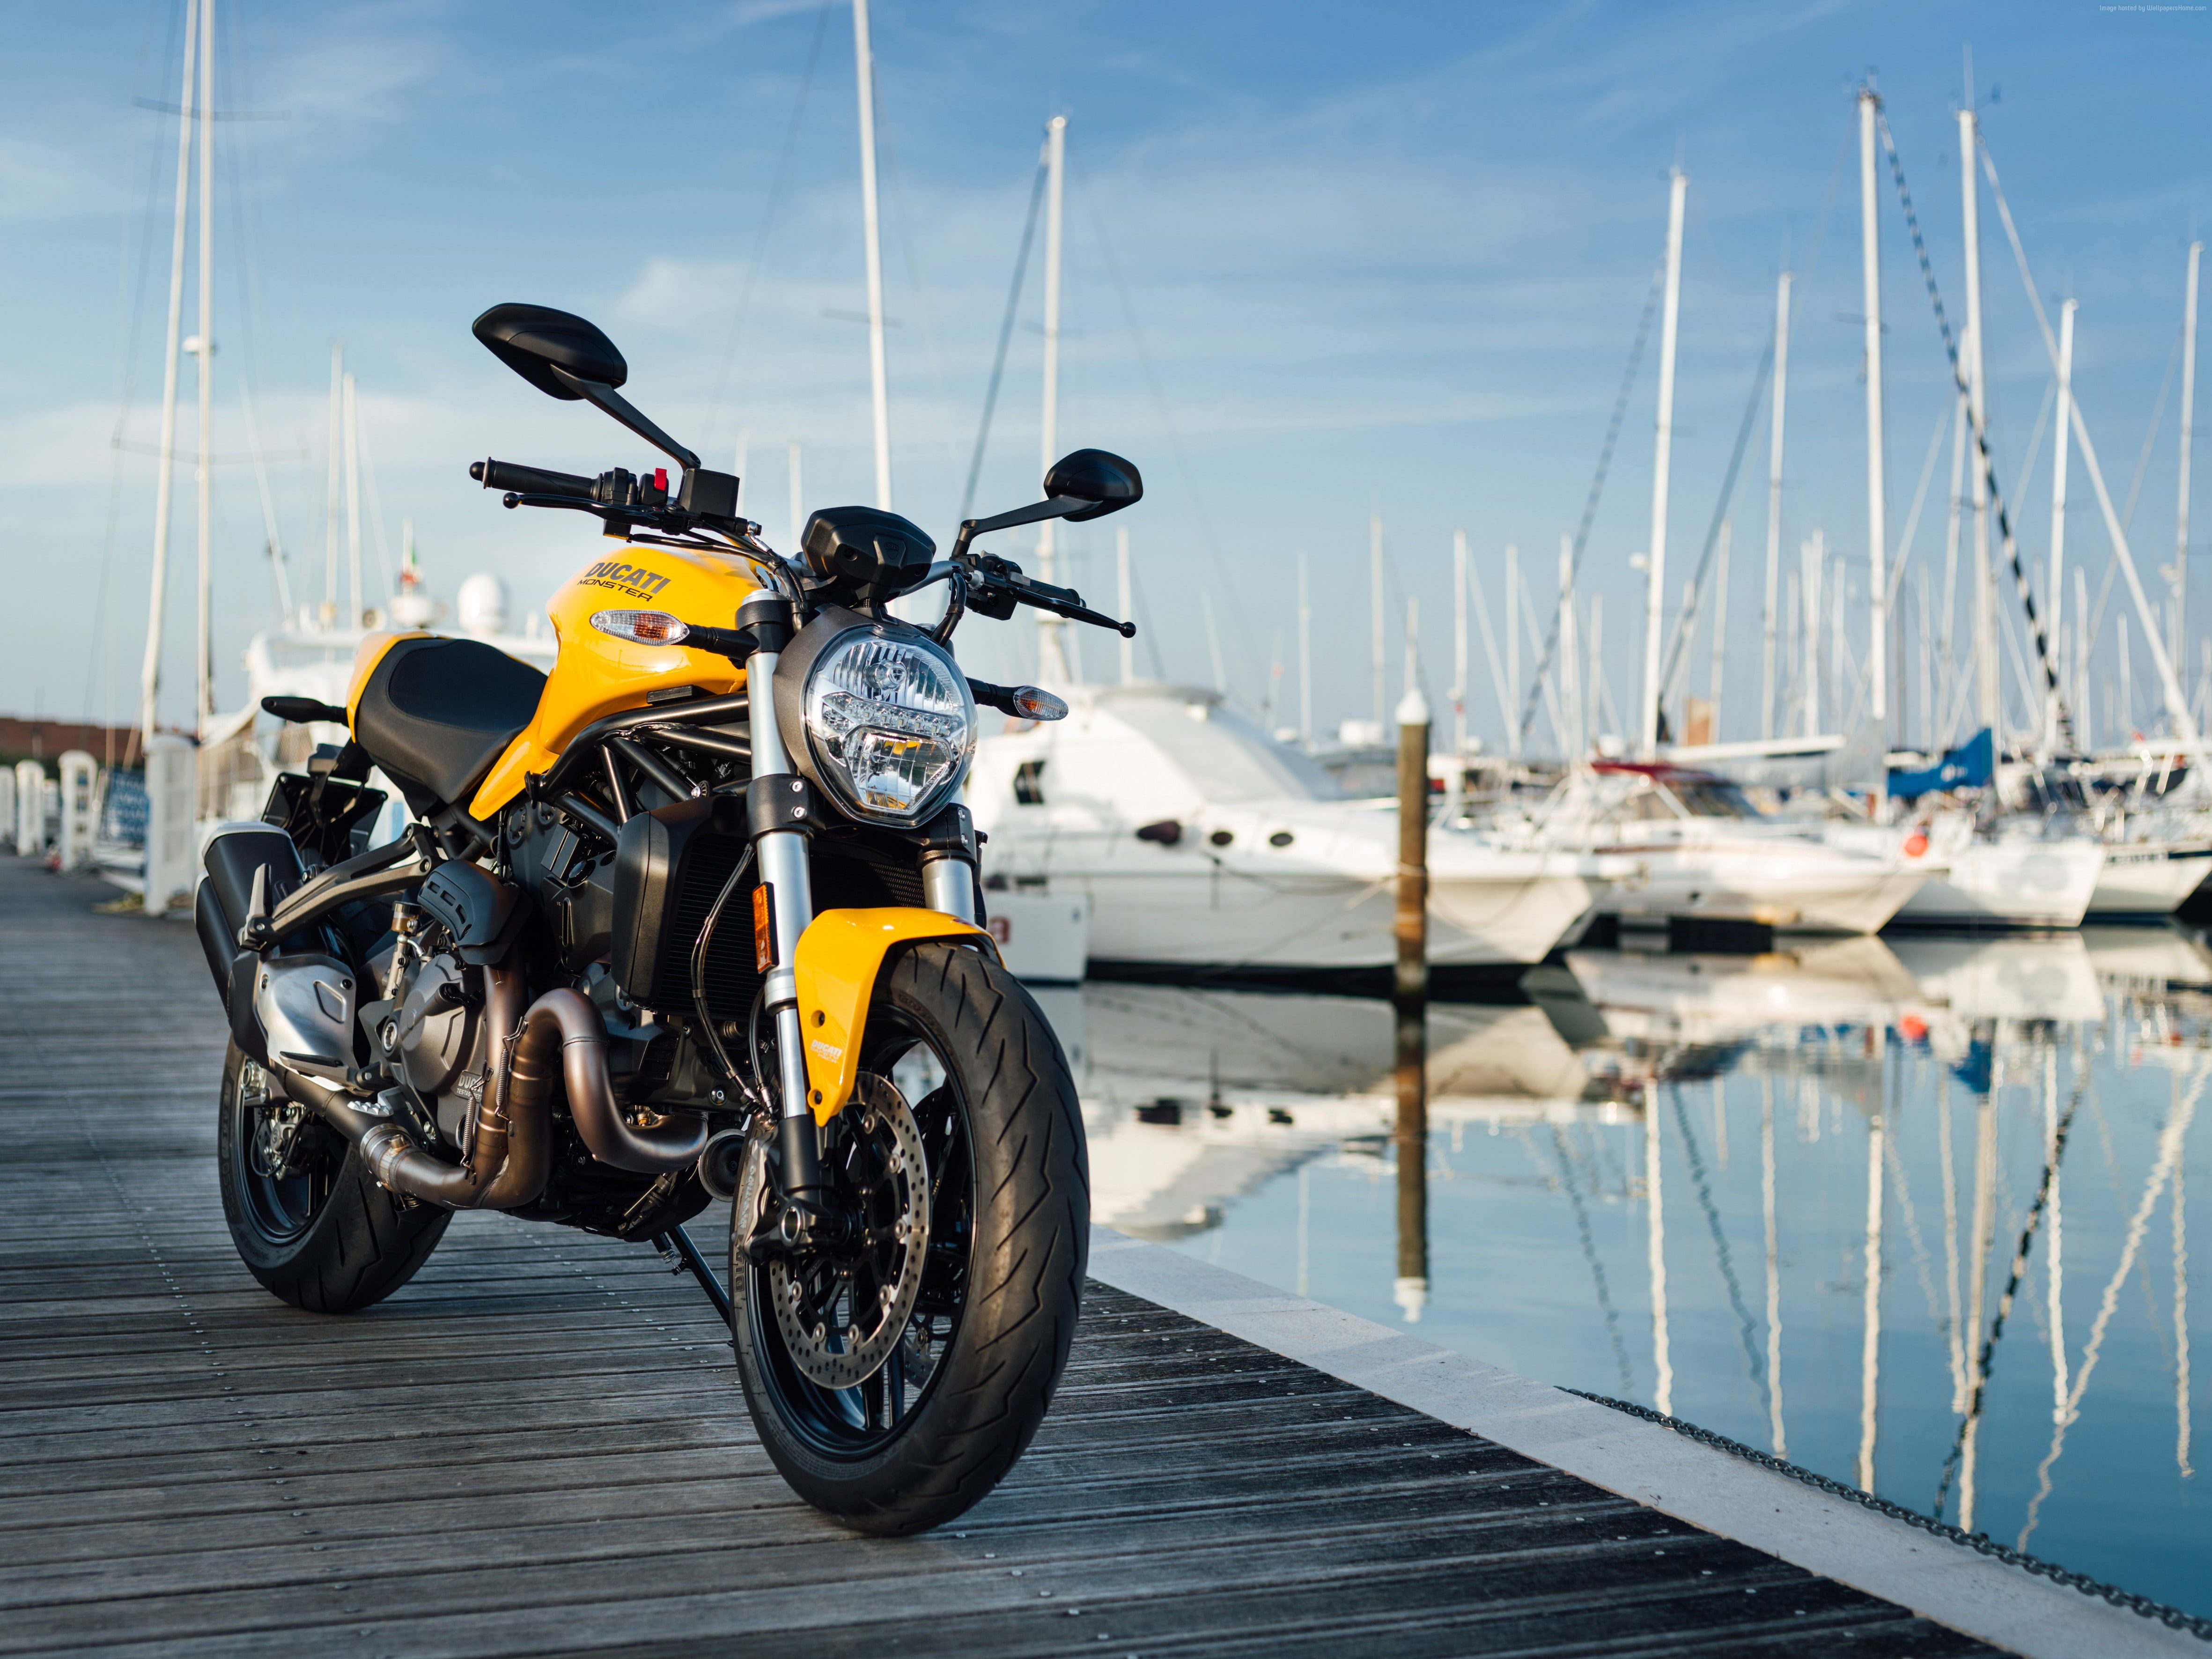 2018 Bikes, 4K, Ducati Monster 821, transportation, mode of transportation